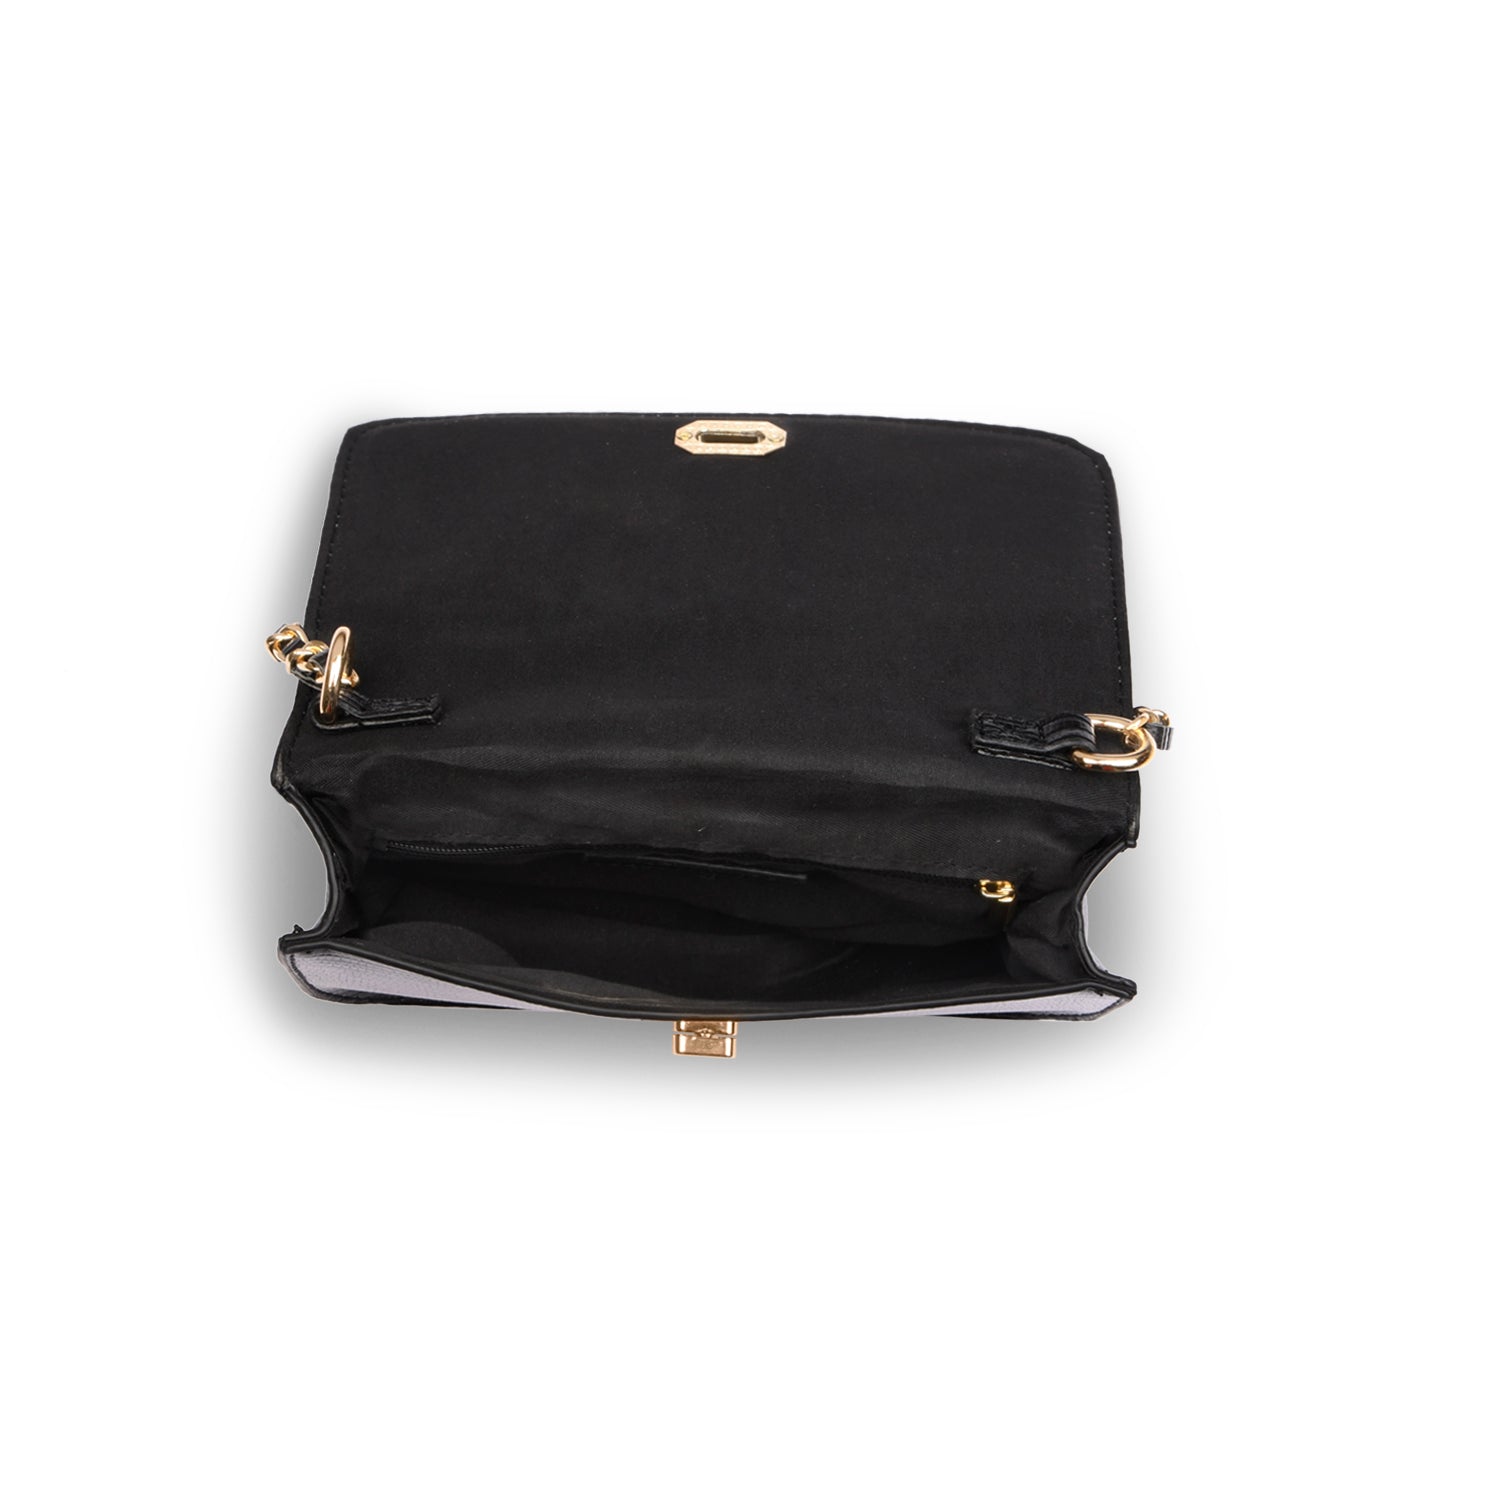 Accessorize London Women's Faux Leather Woven Chain Black Evie Sling Bag